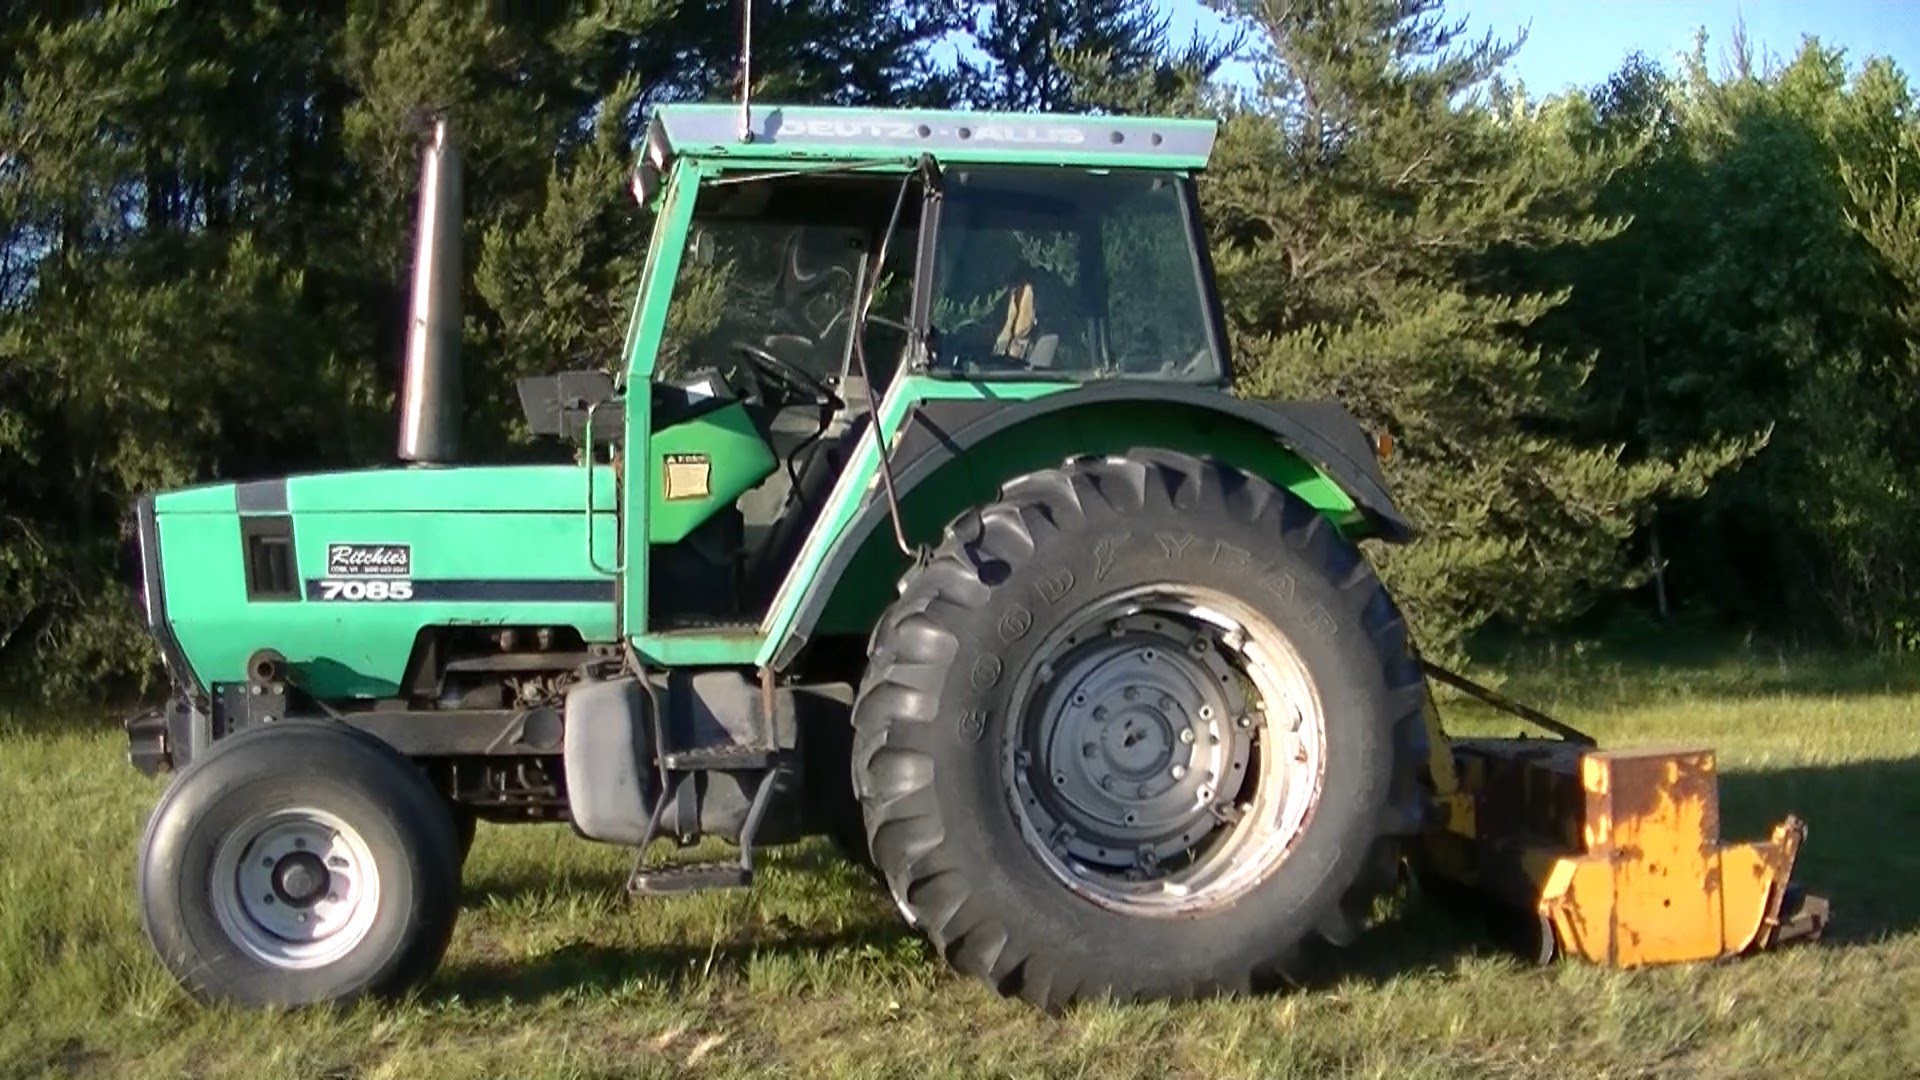 Deutz-Allis 7085 Tractor Bandit 2500 Flail Mower - YouTube